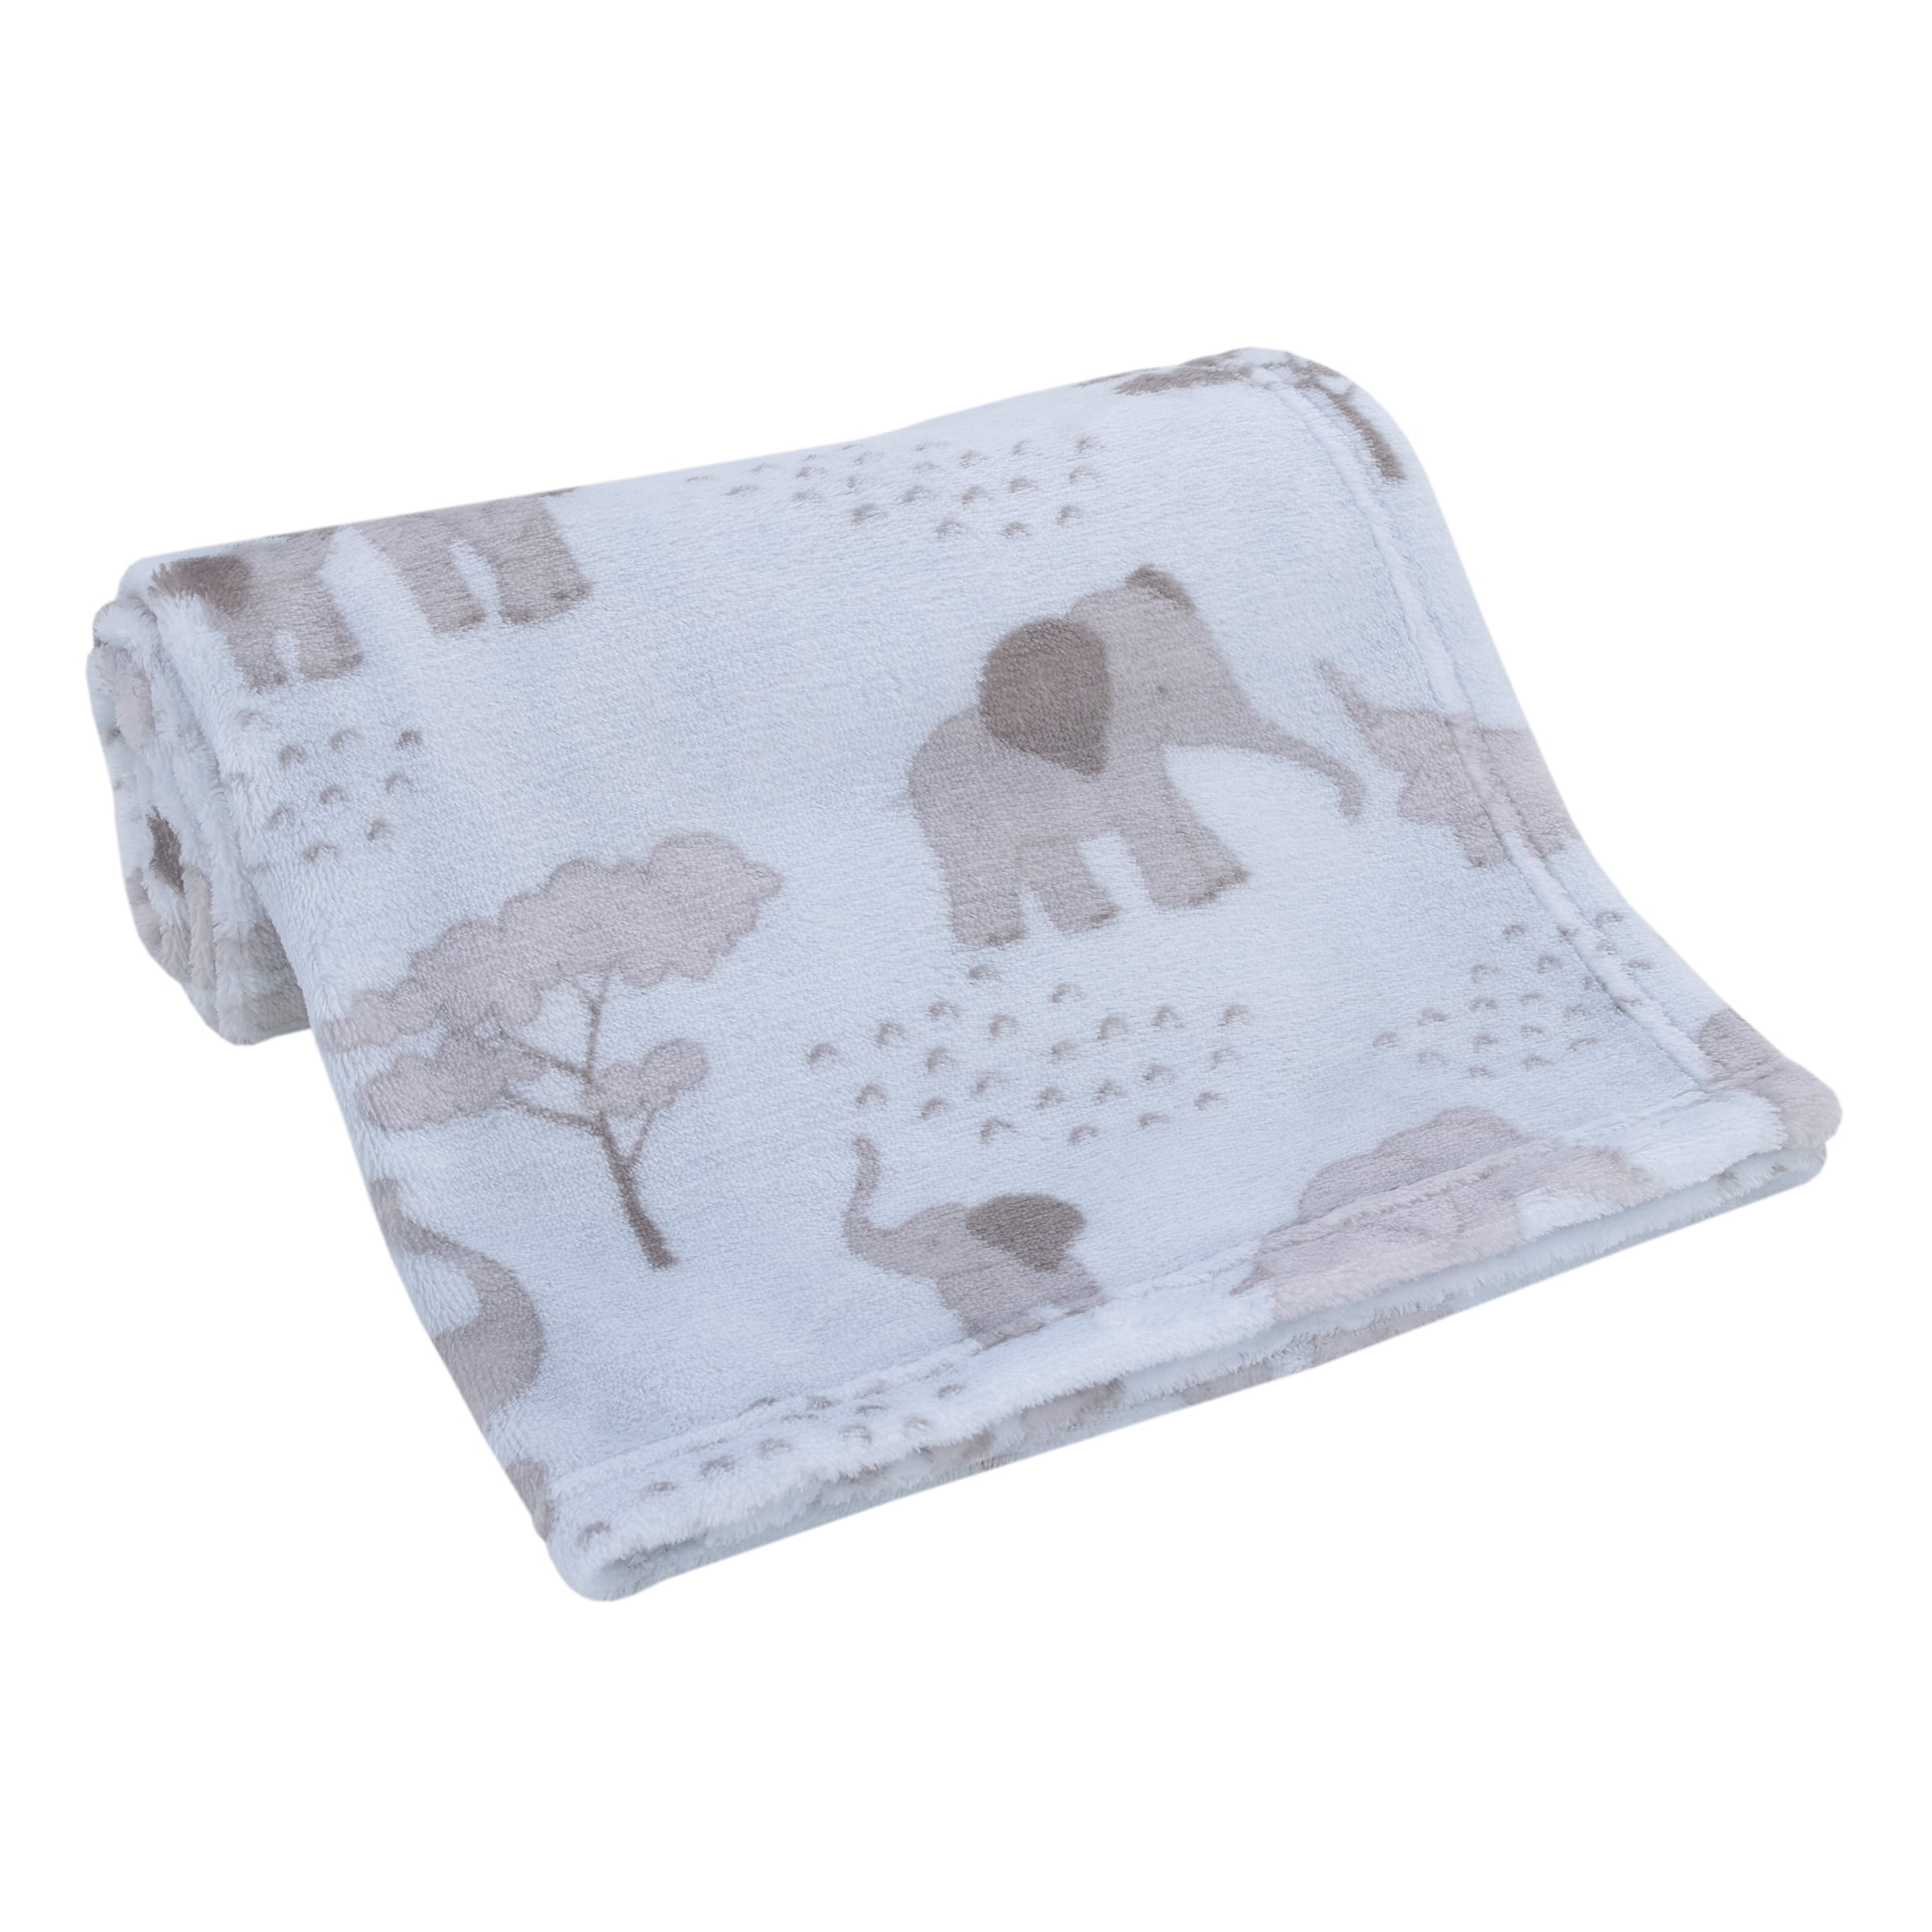 Details about   Nice Cute Little Blue Elephant 3D Warm Plush Fleece Blanket Picnic Sofa Couch 